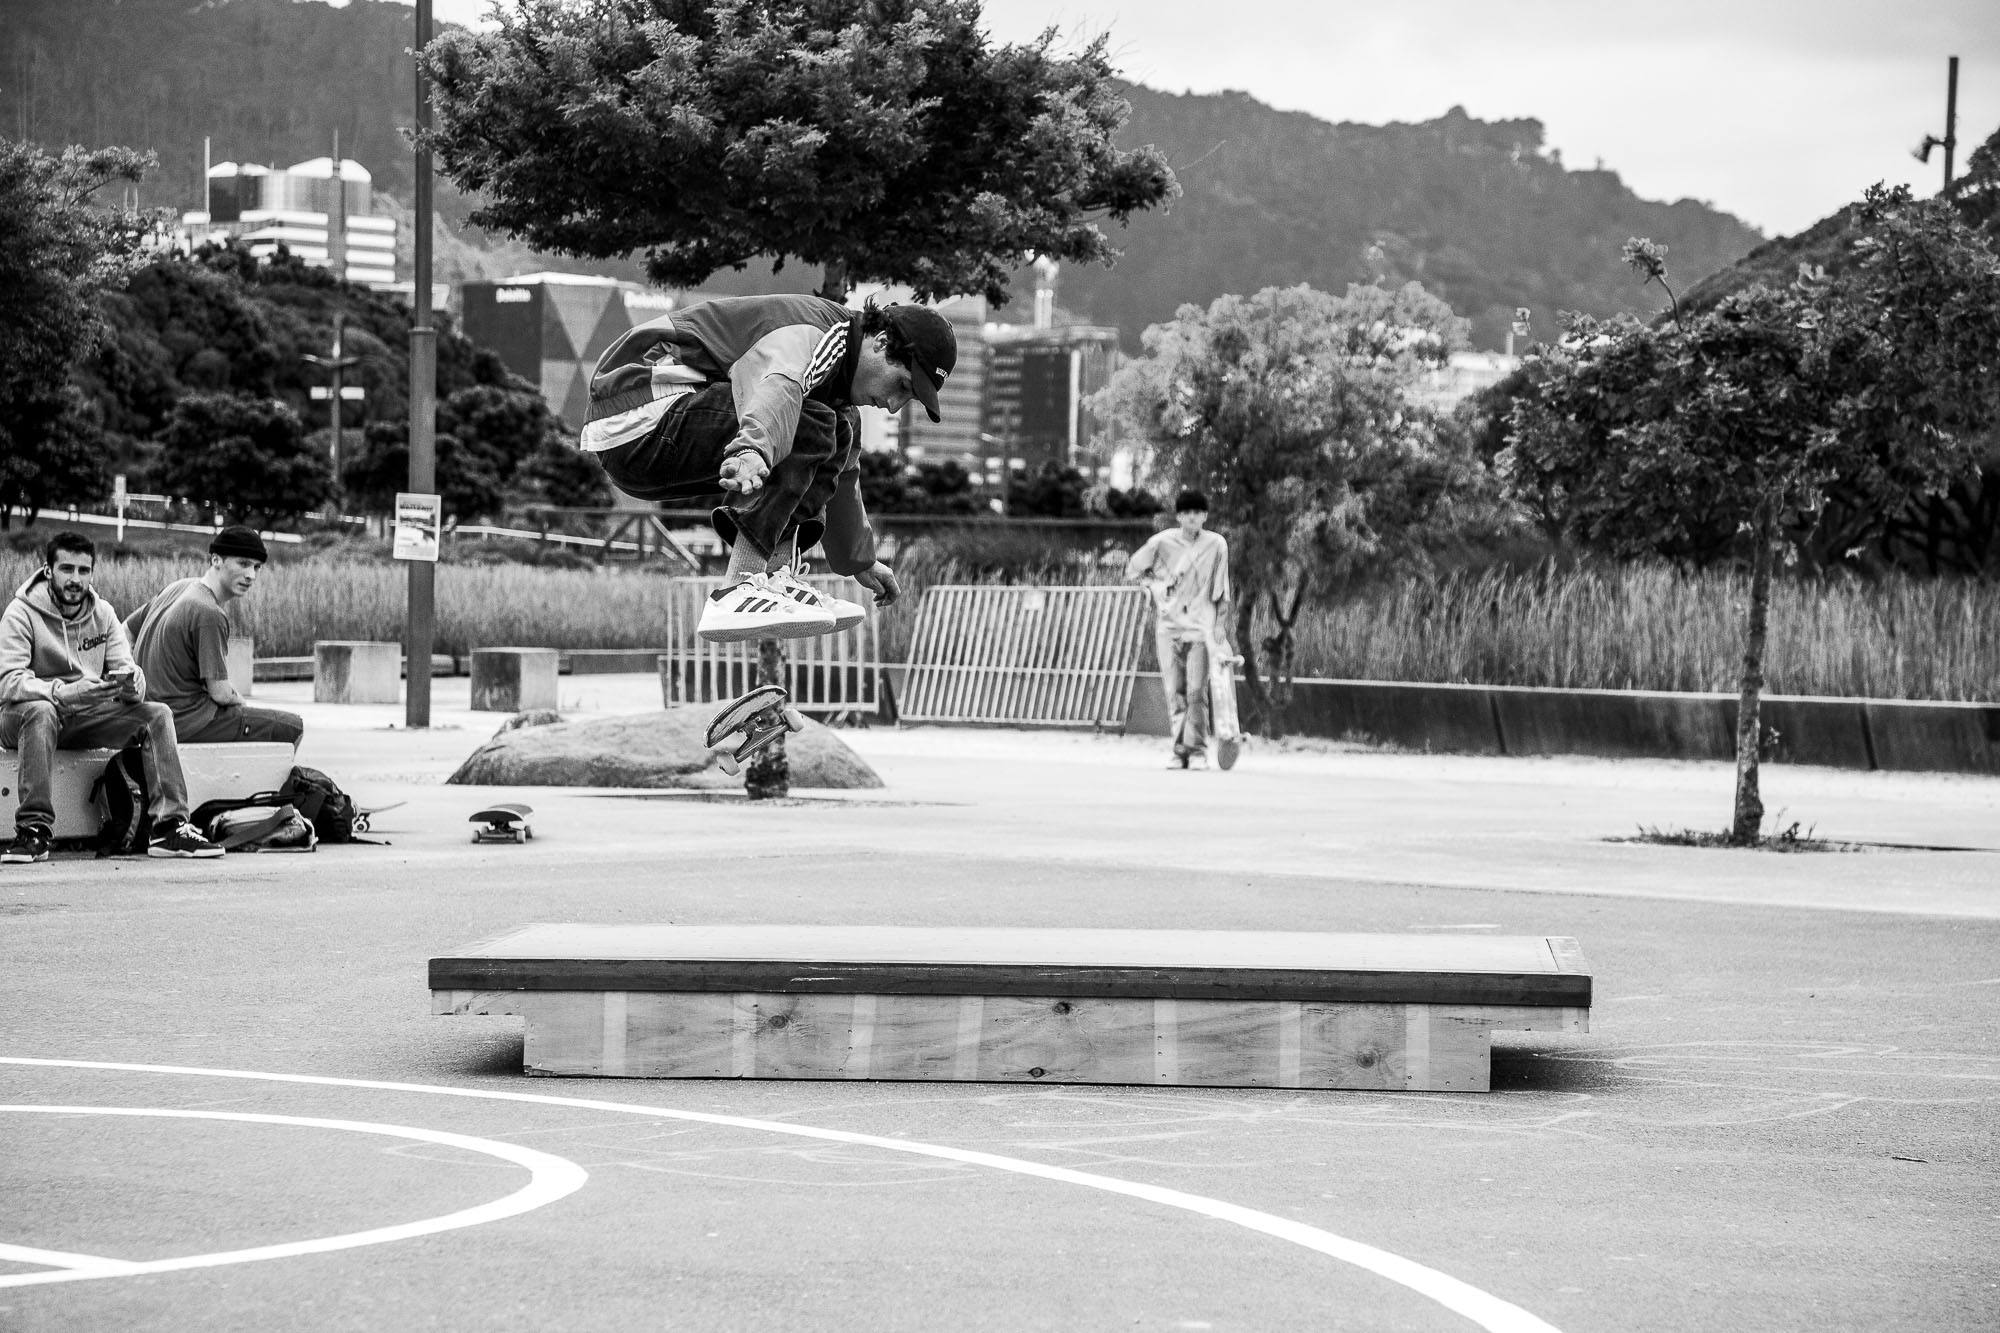 Skateboarding at the Manual Pad Jam event at Waitangi in October 2022 as part of Bowlzilla,